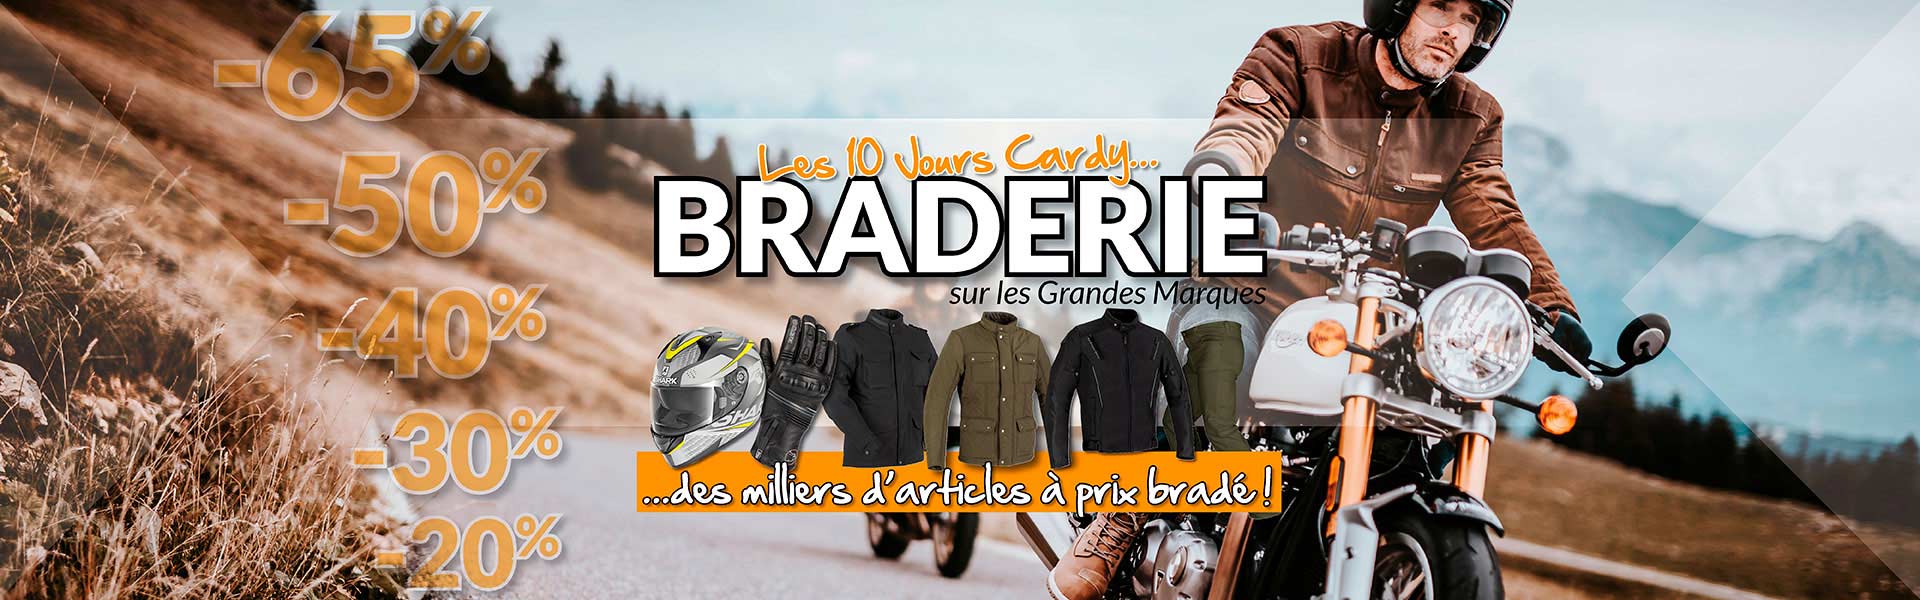 Braderie Cardy Bordeaux